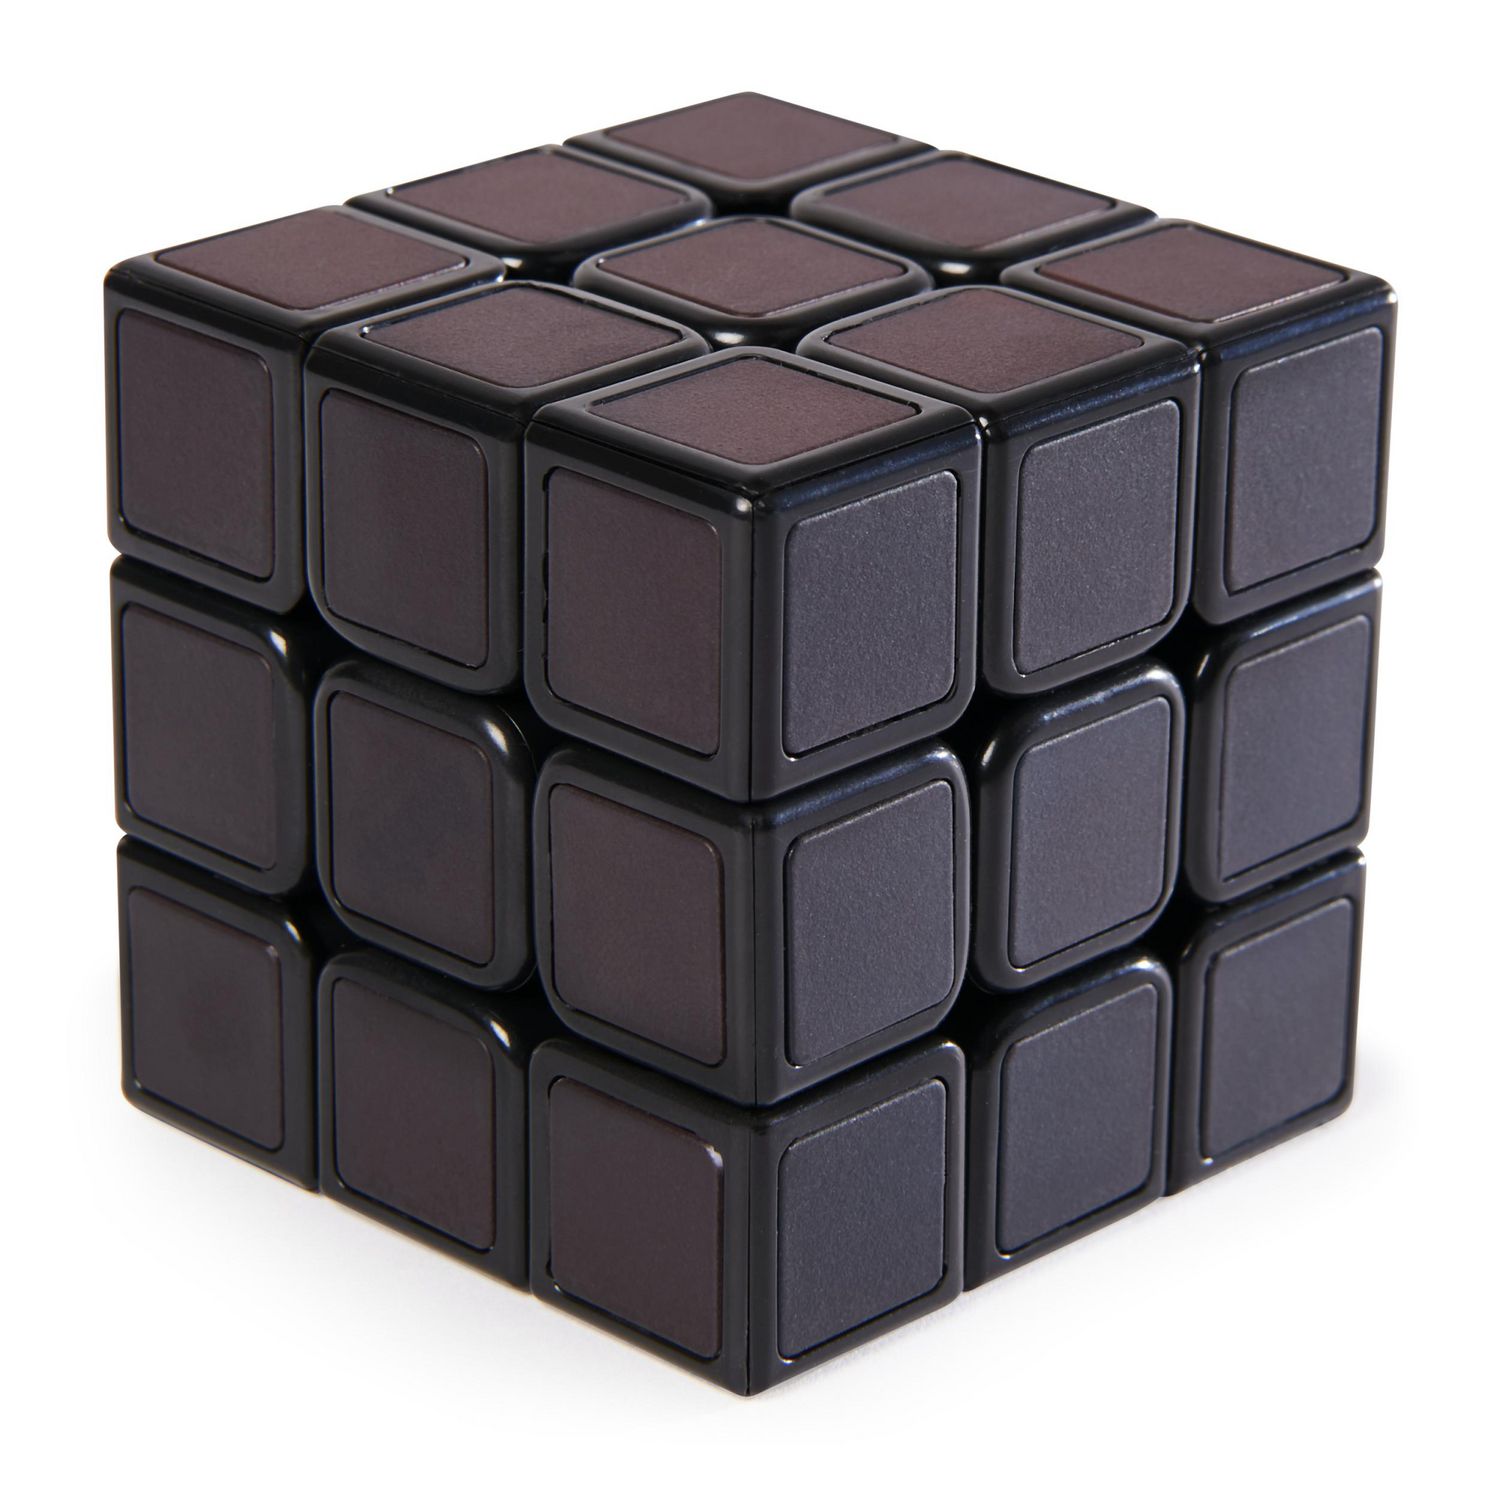 Rubiks cube tissue box -  France